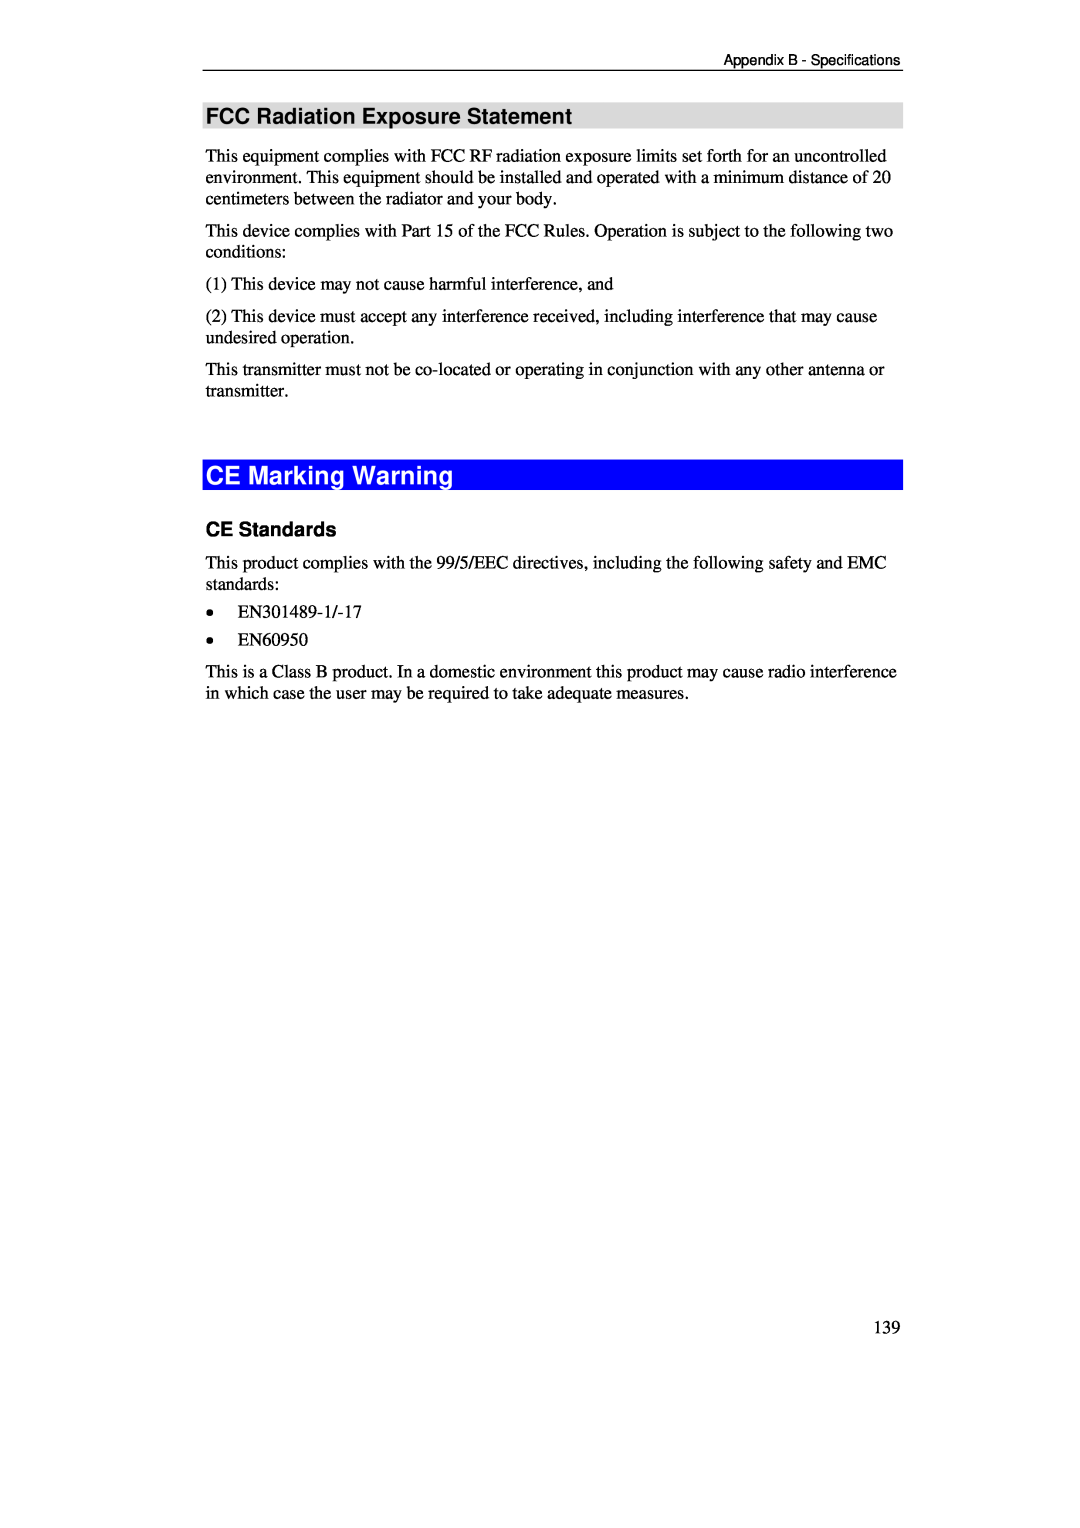 TRENDnet BRV204 manual CE Marking Warning, FCC Radiation Exposure Statement 